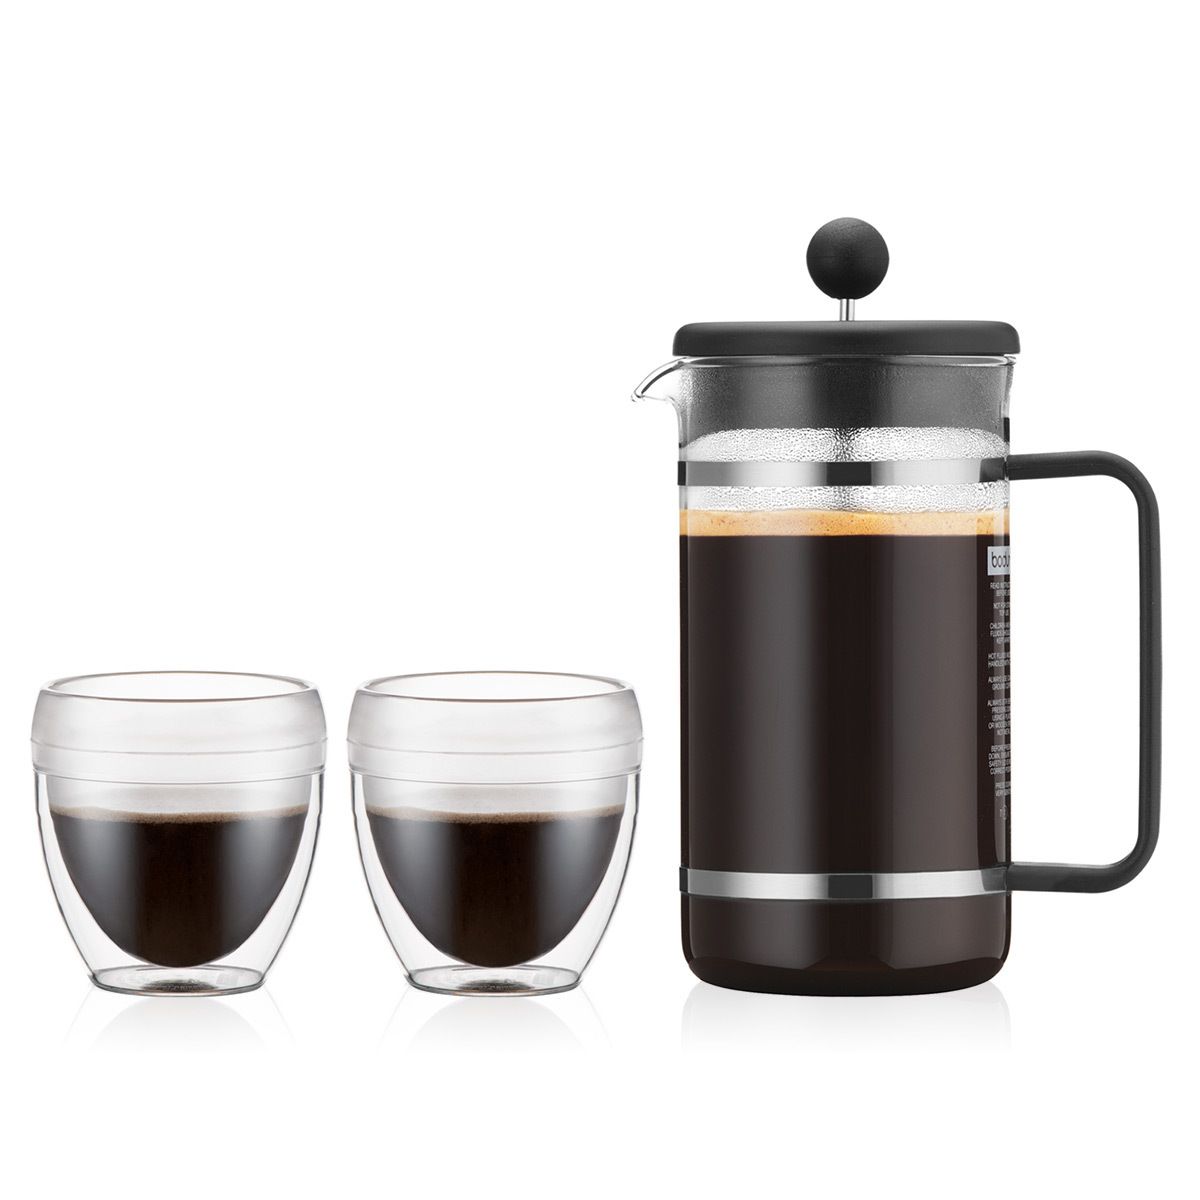 Bodum: Bistro Set - 8 Cup French Press coffee maker w/ 2 pcs Pavina Outdoor 8 oz. Glass Cups $17.99 & MORE